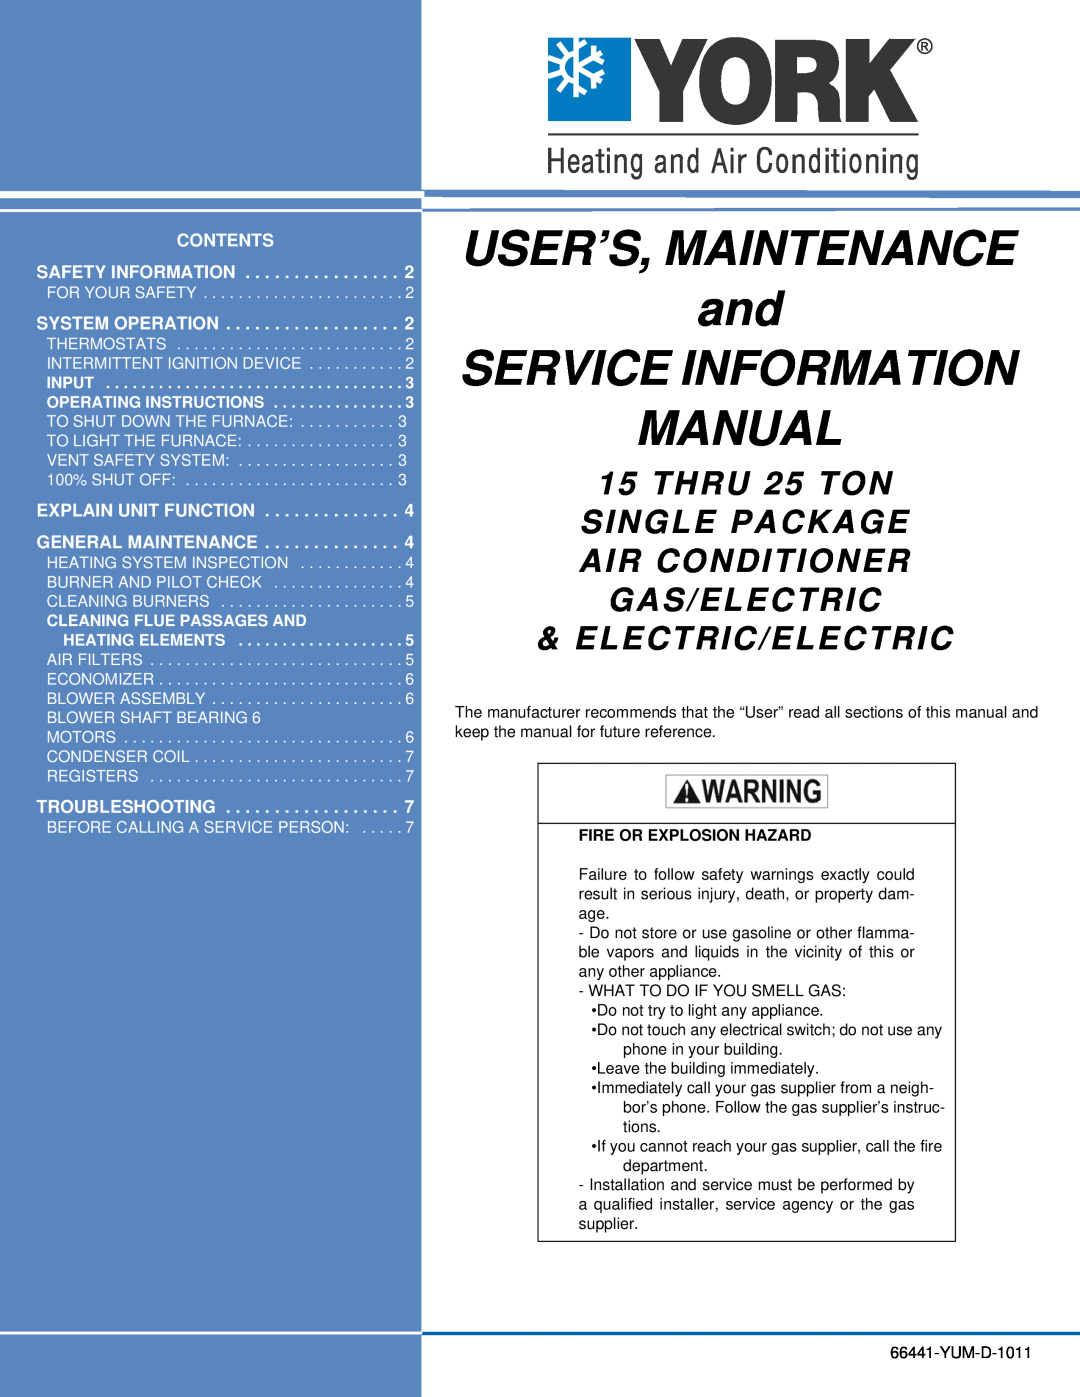 York 66441-YUM-D-1011 manual USER’S, MAINTENANCE and SERVICE INFORMATION, Manual, THRU 25 TON, Electric/Electric 